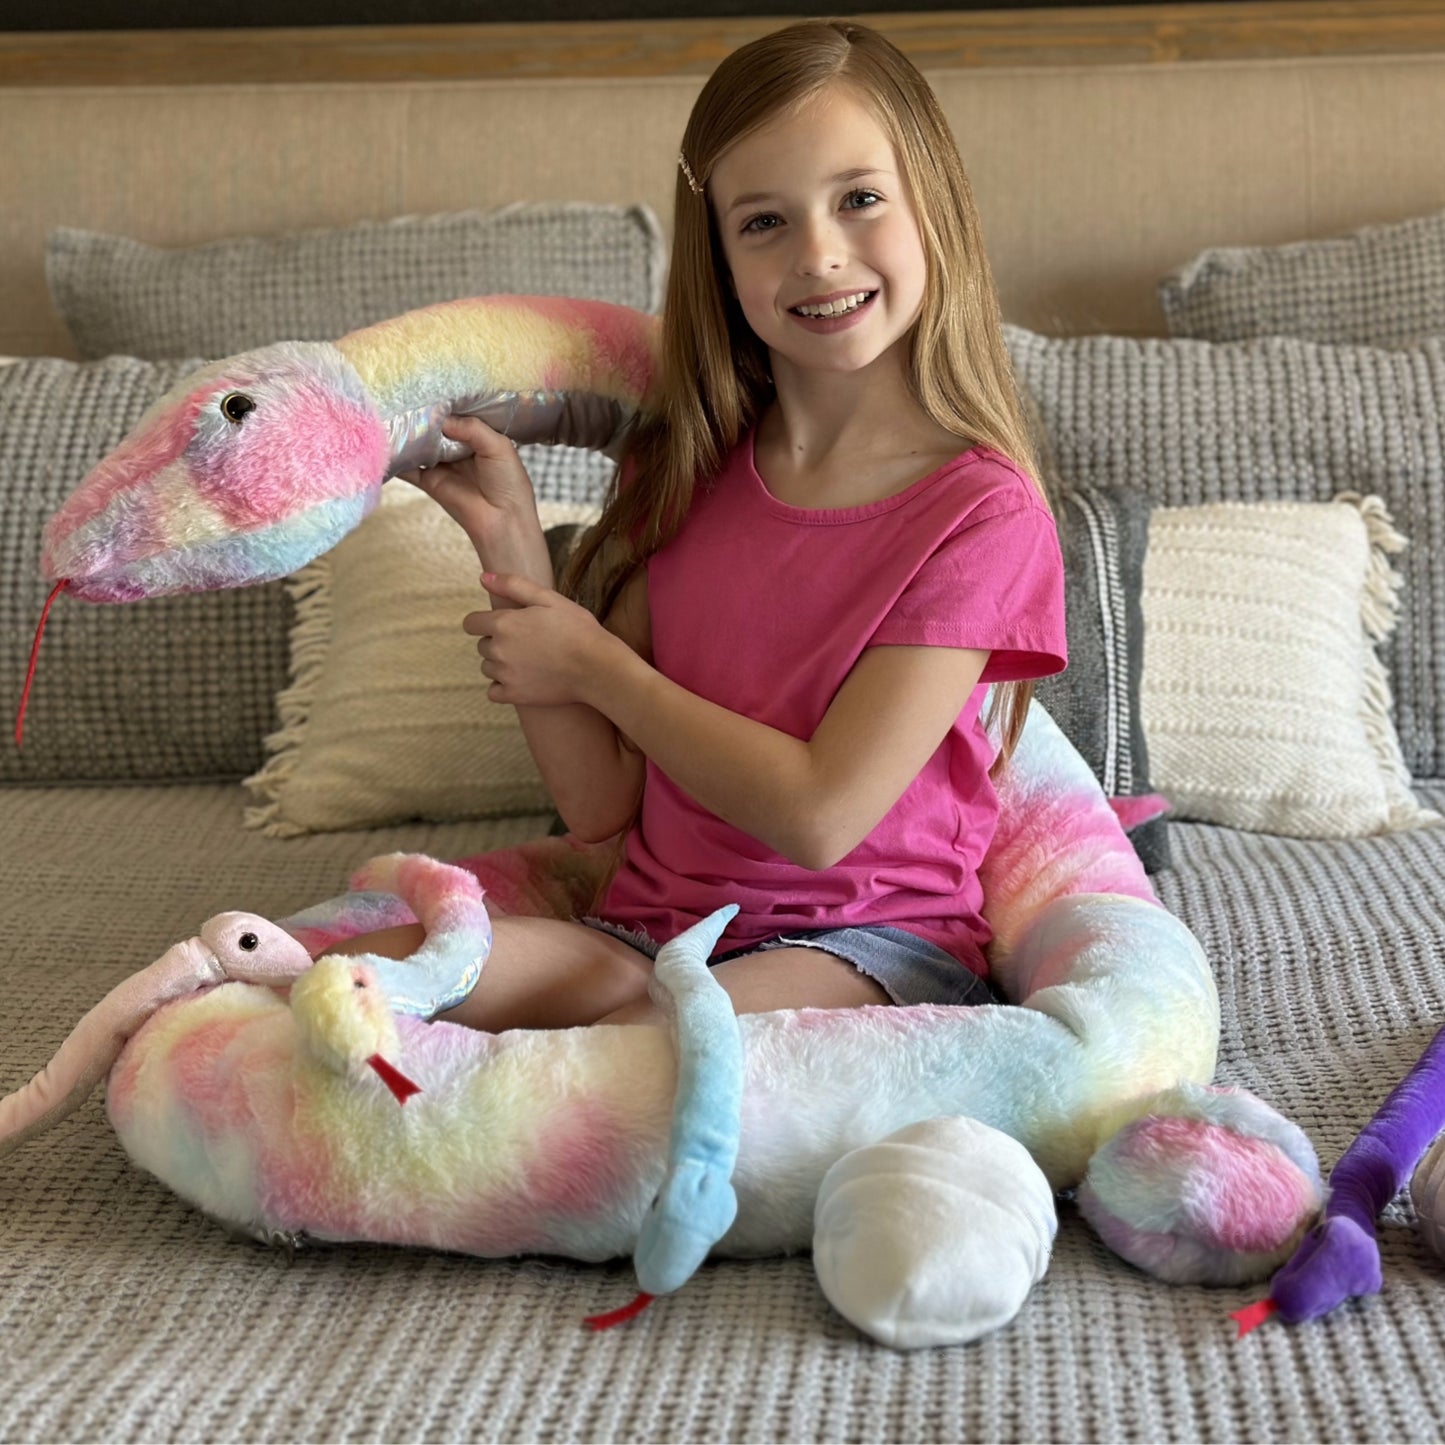 Snake Stuffed Animal Toy Set, Pink, 120 Inches - MorisMos Stuffed Animals